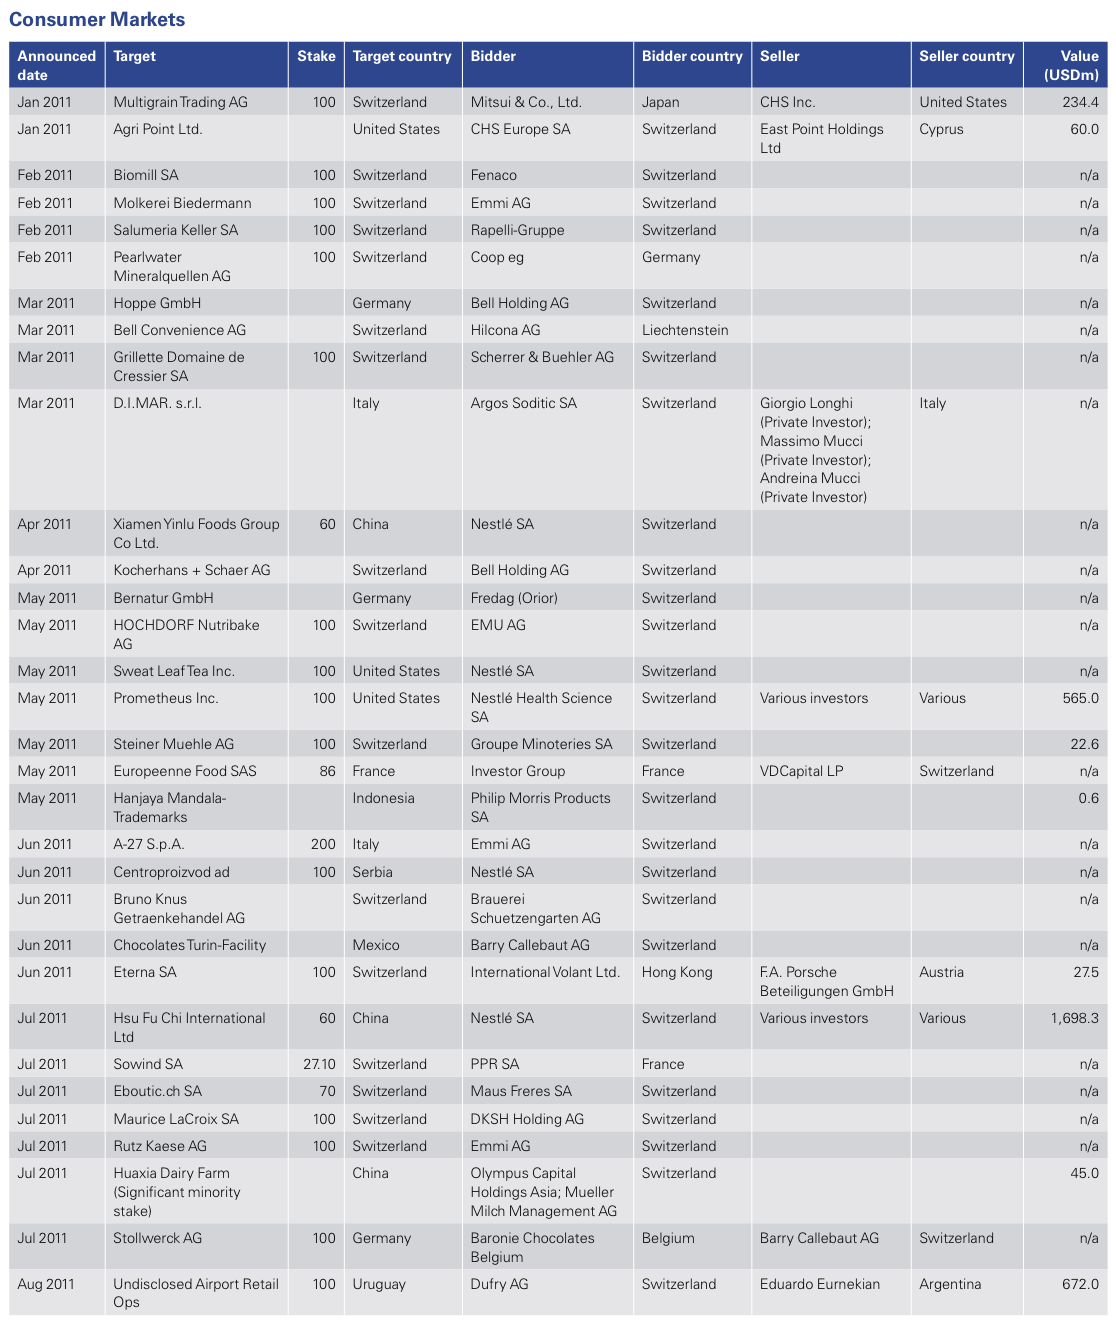 Figure 18: List of 2011 Swiss M&A Transactions